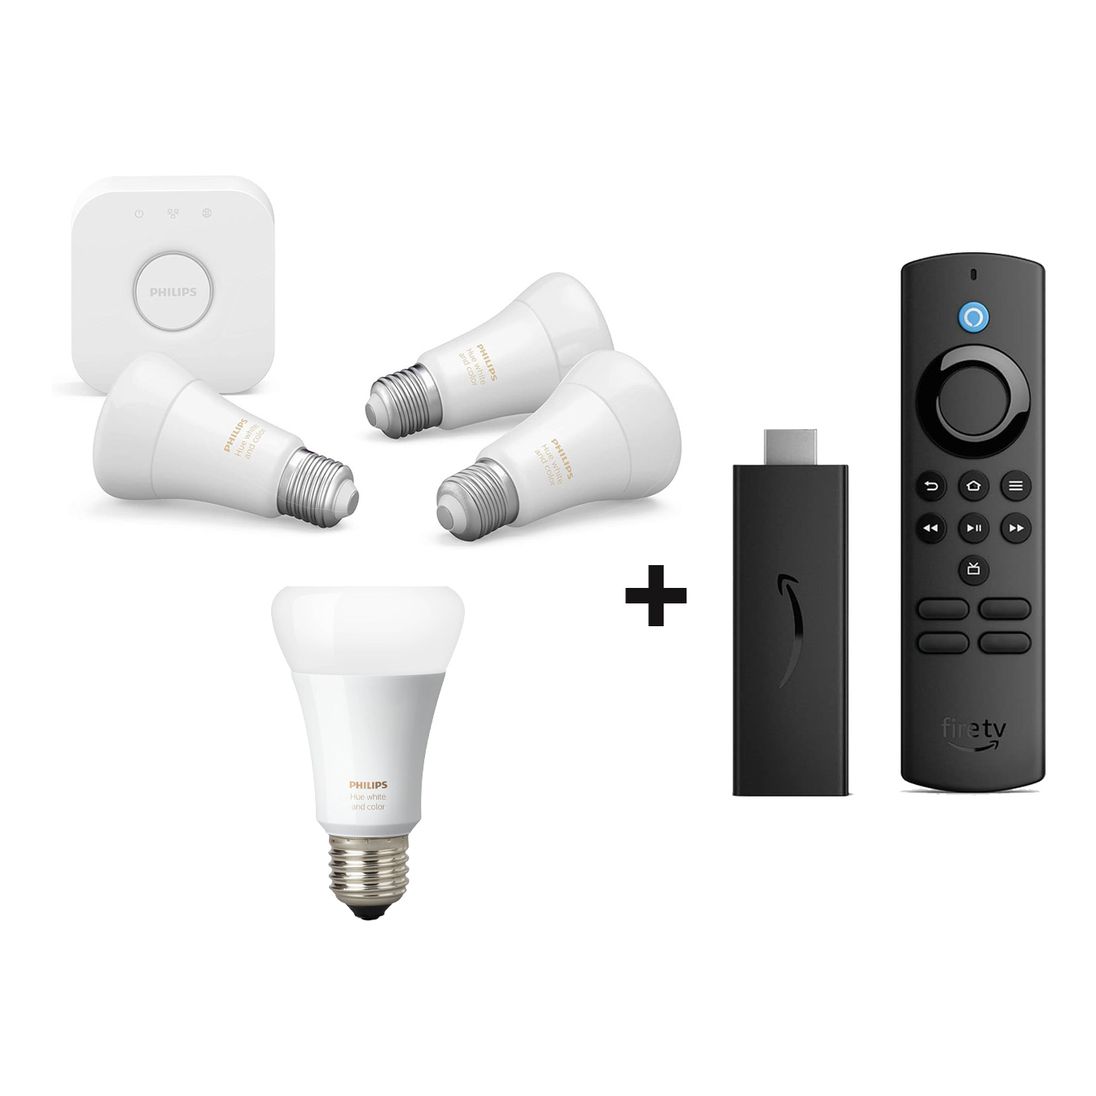 Philips Hue White & Colour Ambiance Starter Kit (3 Bulbs & Bridge) + Amazon Fire Tv Stick Lite + Hue Color Bulb